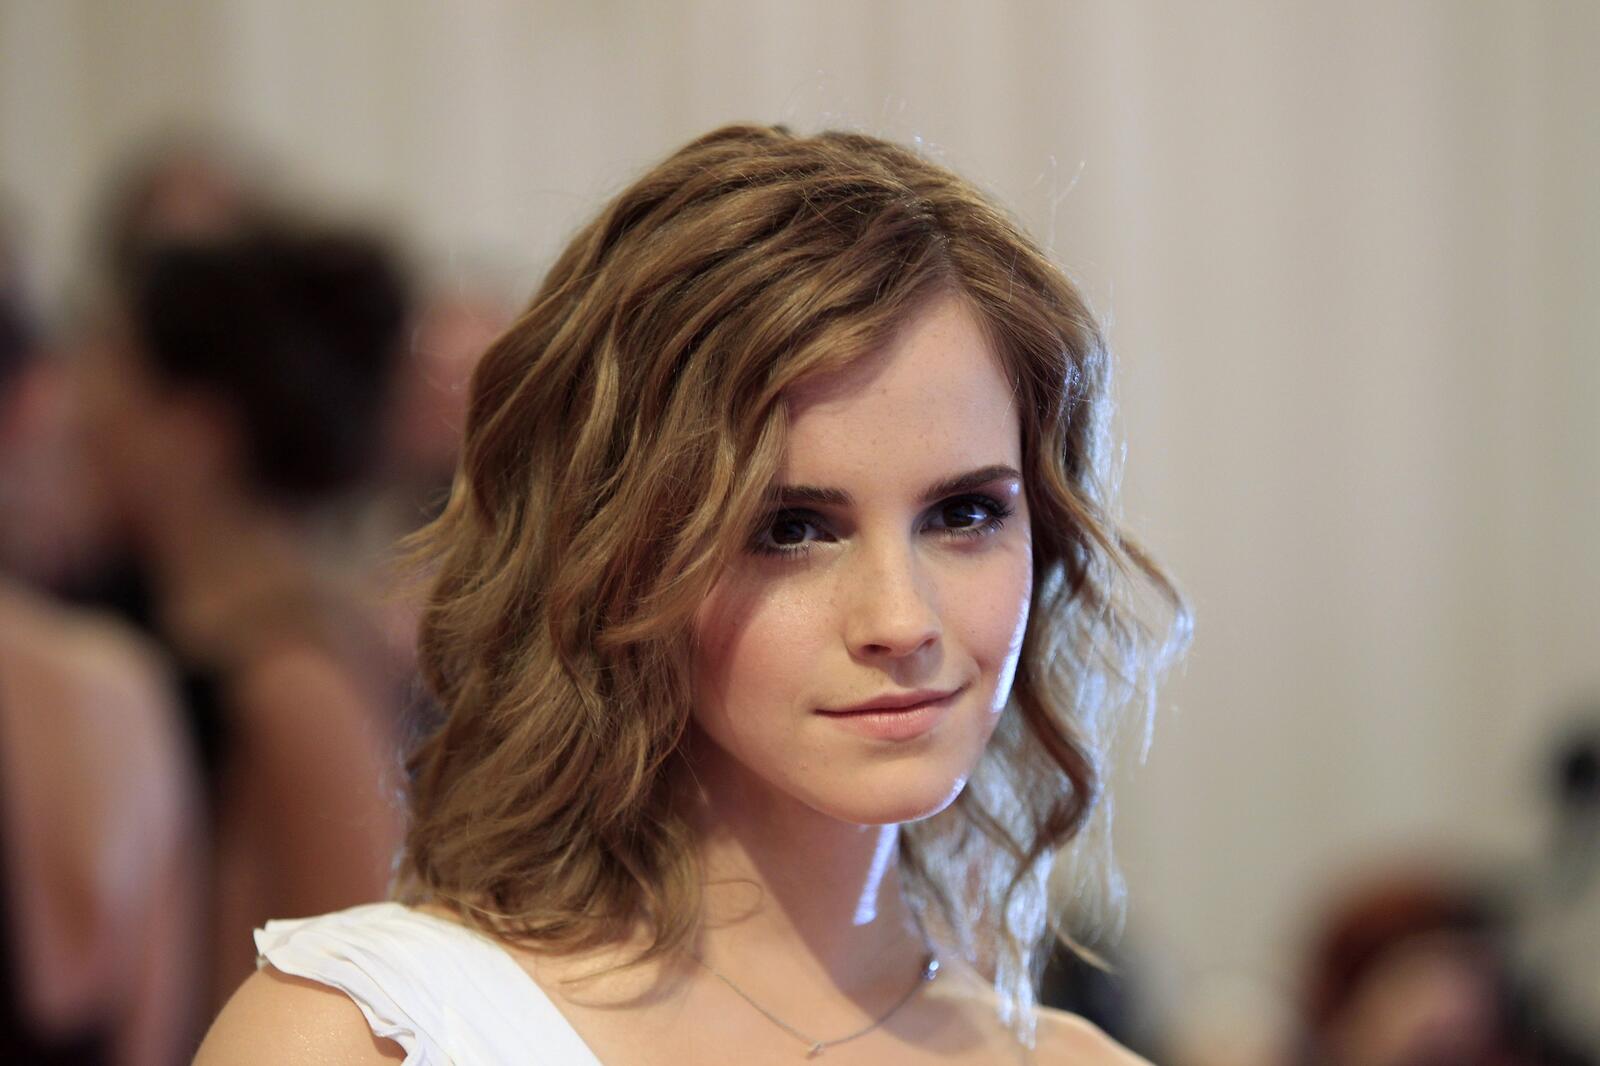 Wallpapers Emma Watson actress smiling on the desktop